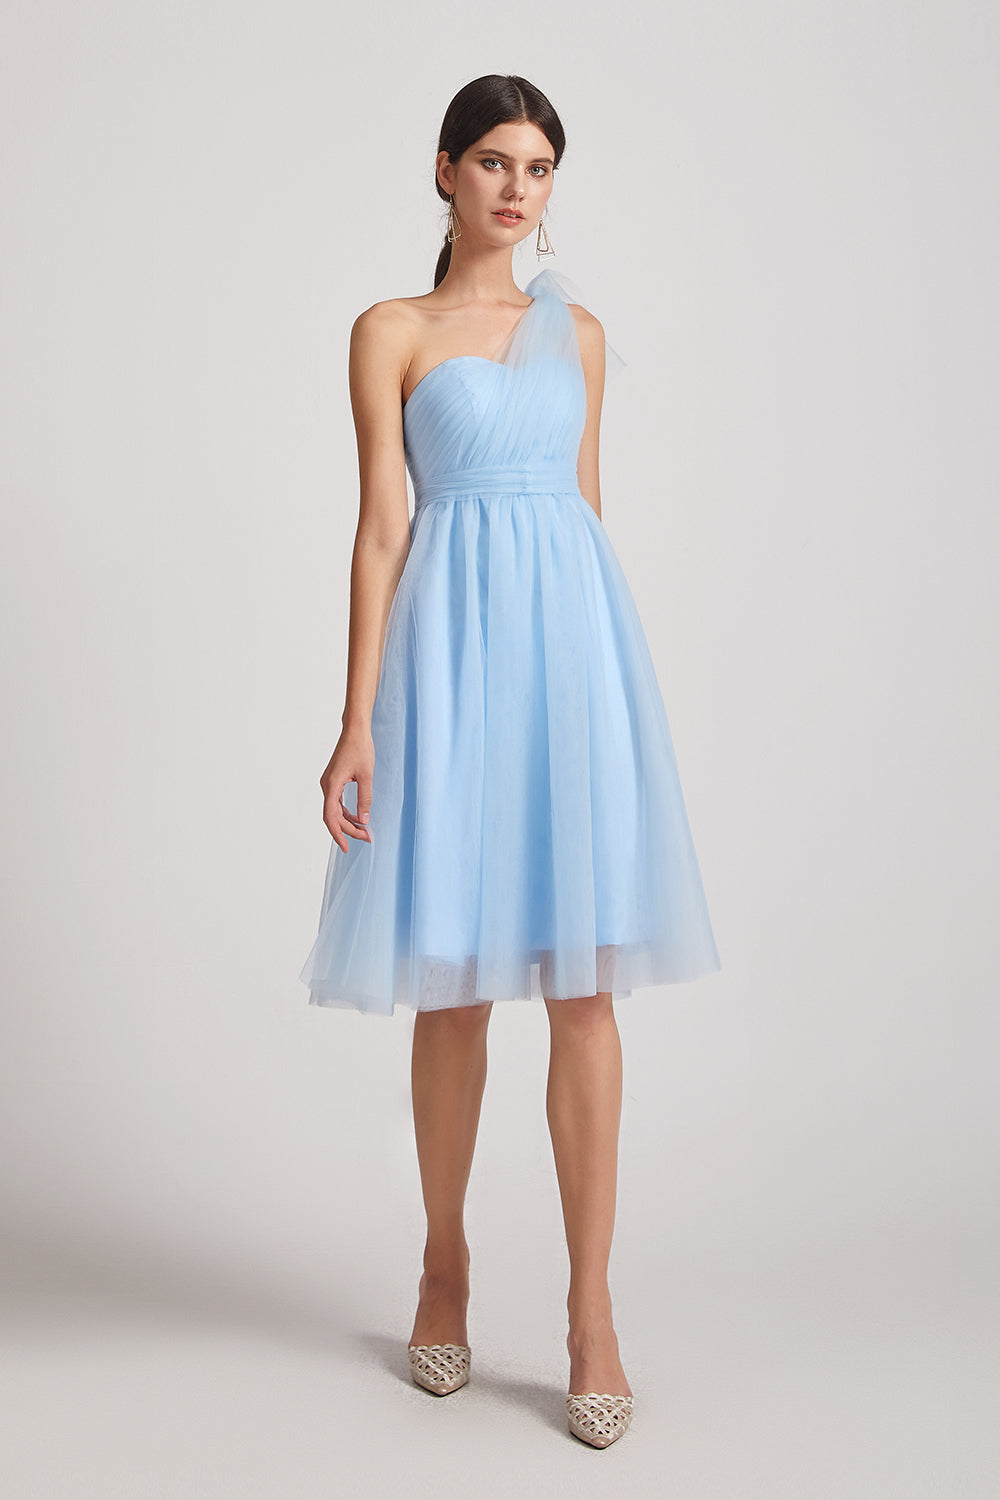 convertible blue knee length  bridesmaid dress